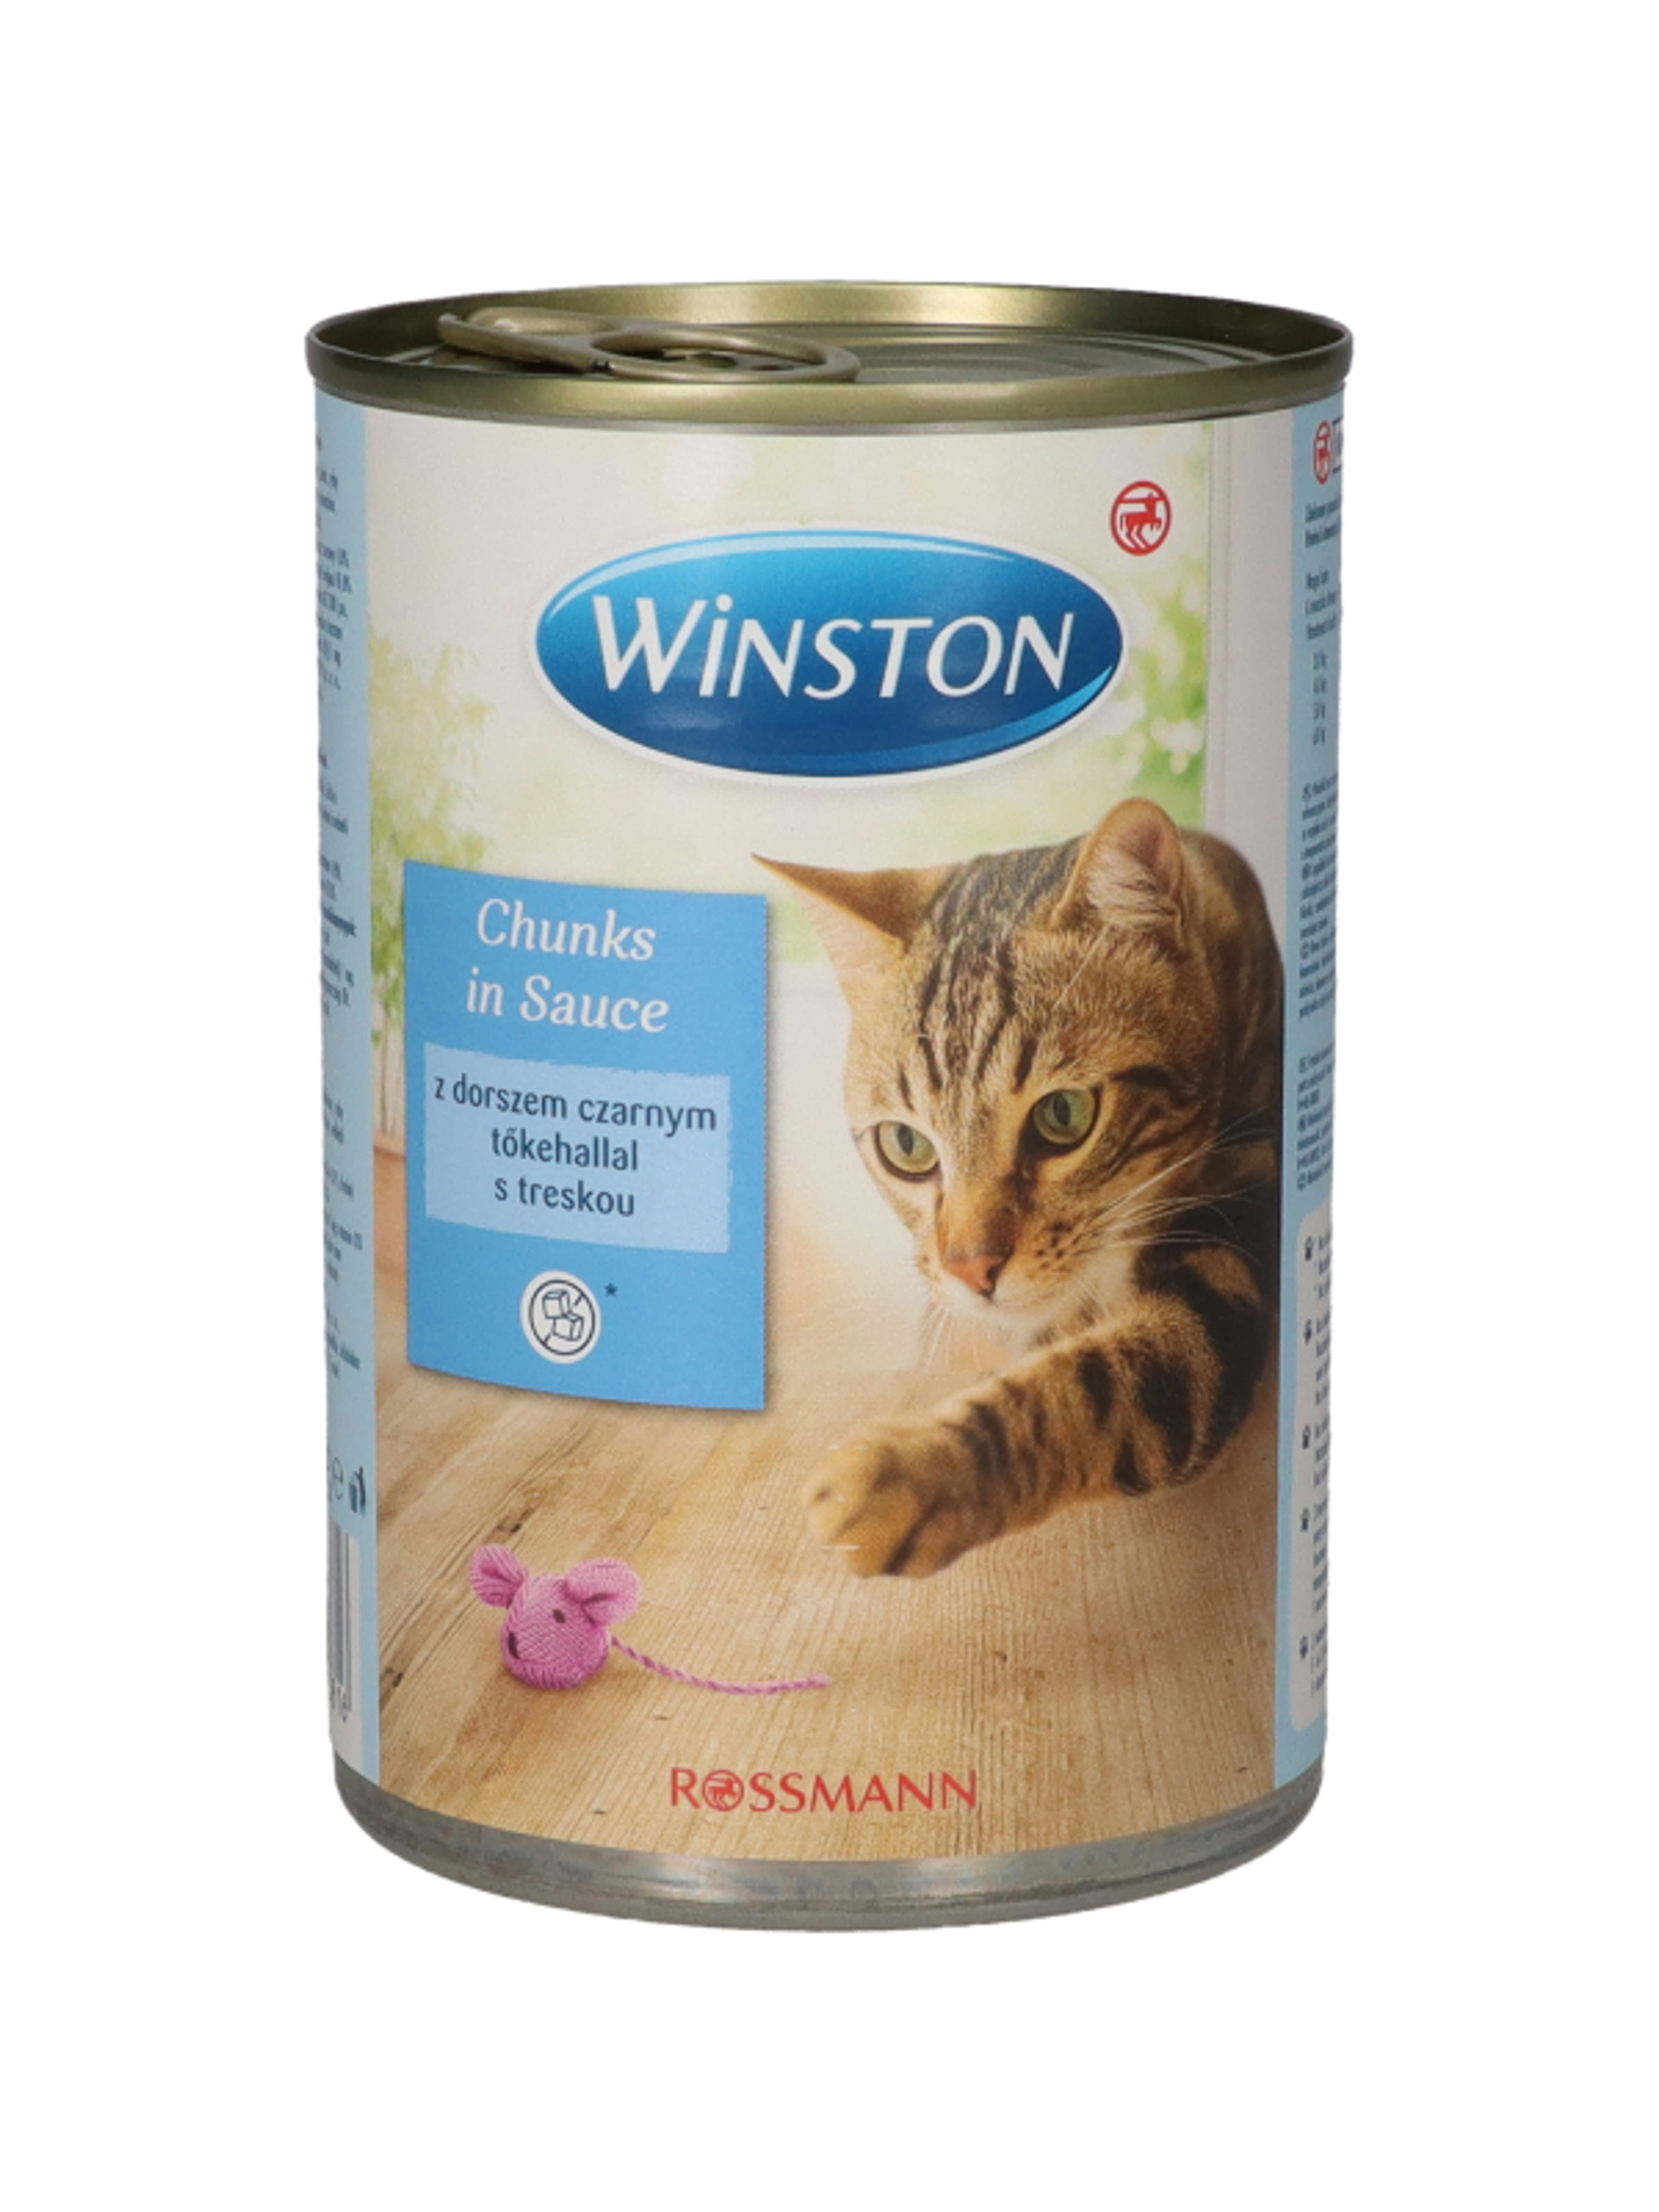 Winston konzerv macskáknak, lazaccal - 400 g